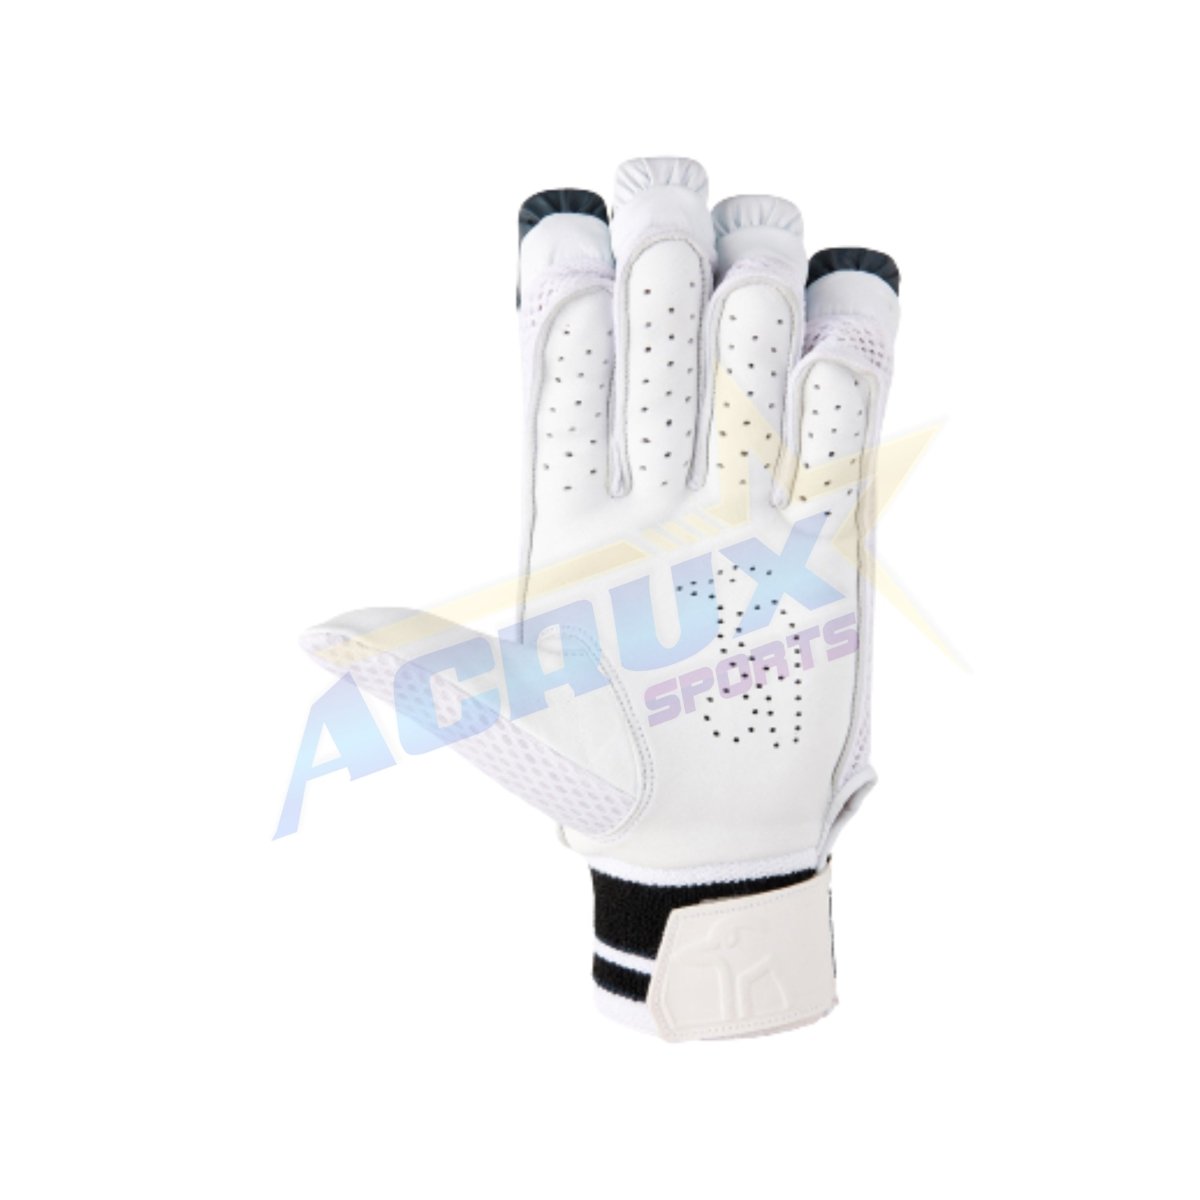 Kookaburra Shadow Pro 4.0 Cricket Batting Gloves - Acrux Sports